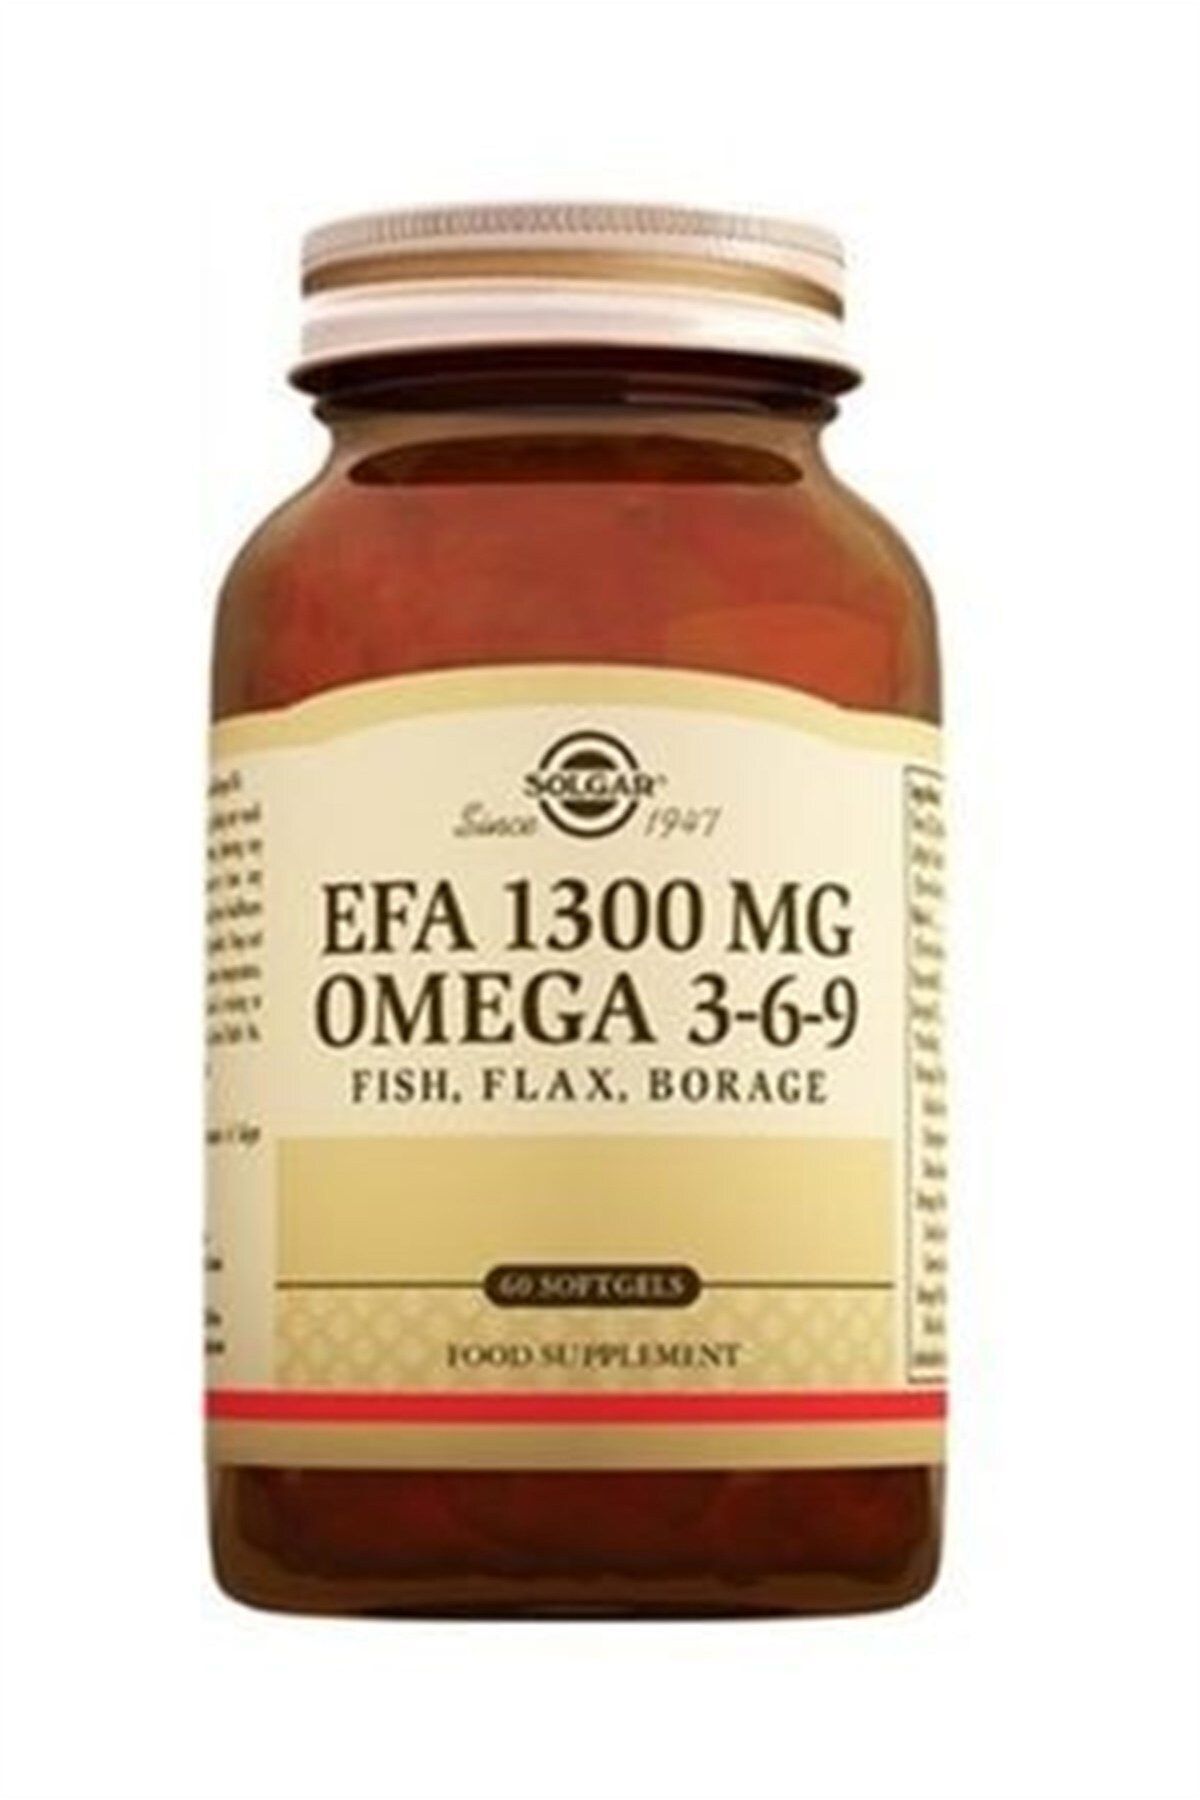 Solgar Efa 1300 Mg Omega 3-6-9 60 Softgel